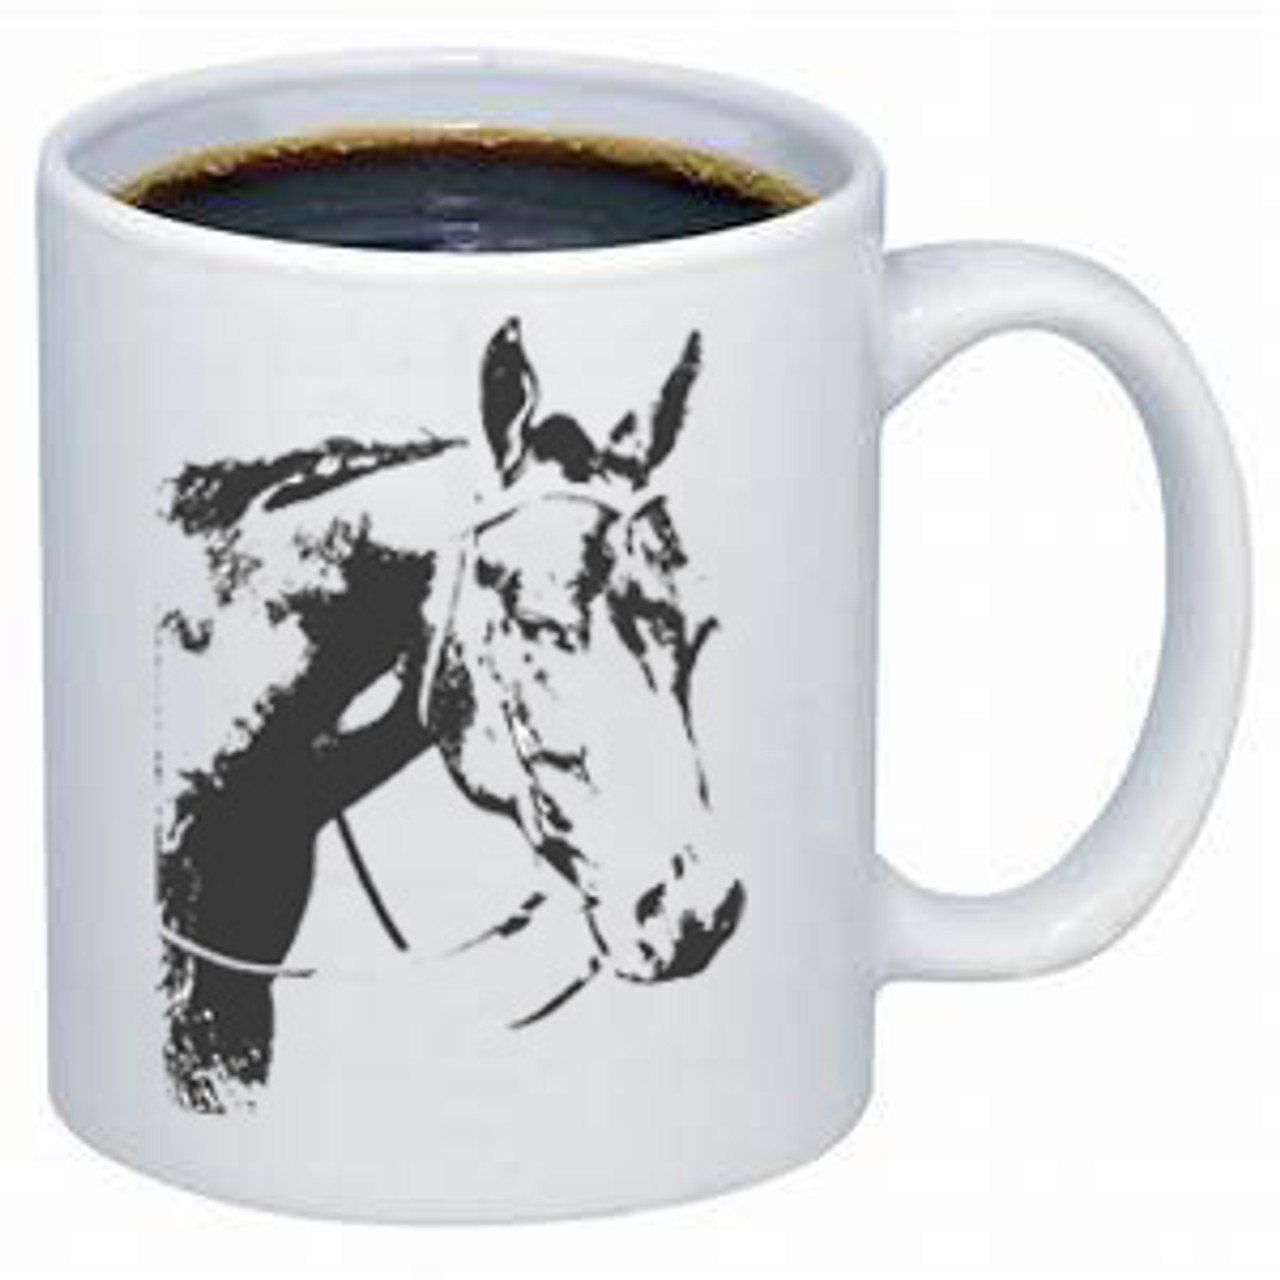 https://cdn11.bigcommerce.com/s-y2vim6a1yi/images/stencil/1280x1280/products/335/1324/Mug-Ghost-Horse-Western__65033.1570300269.jpg?c=1